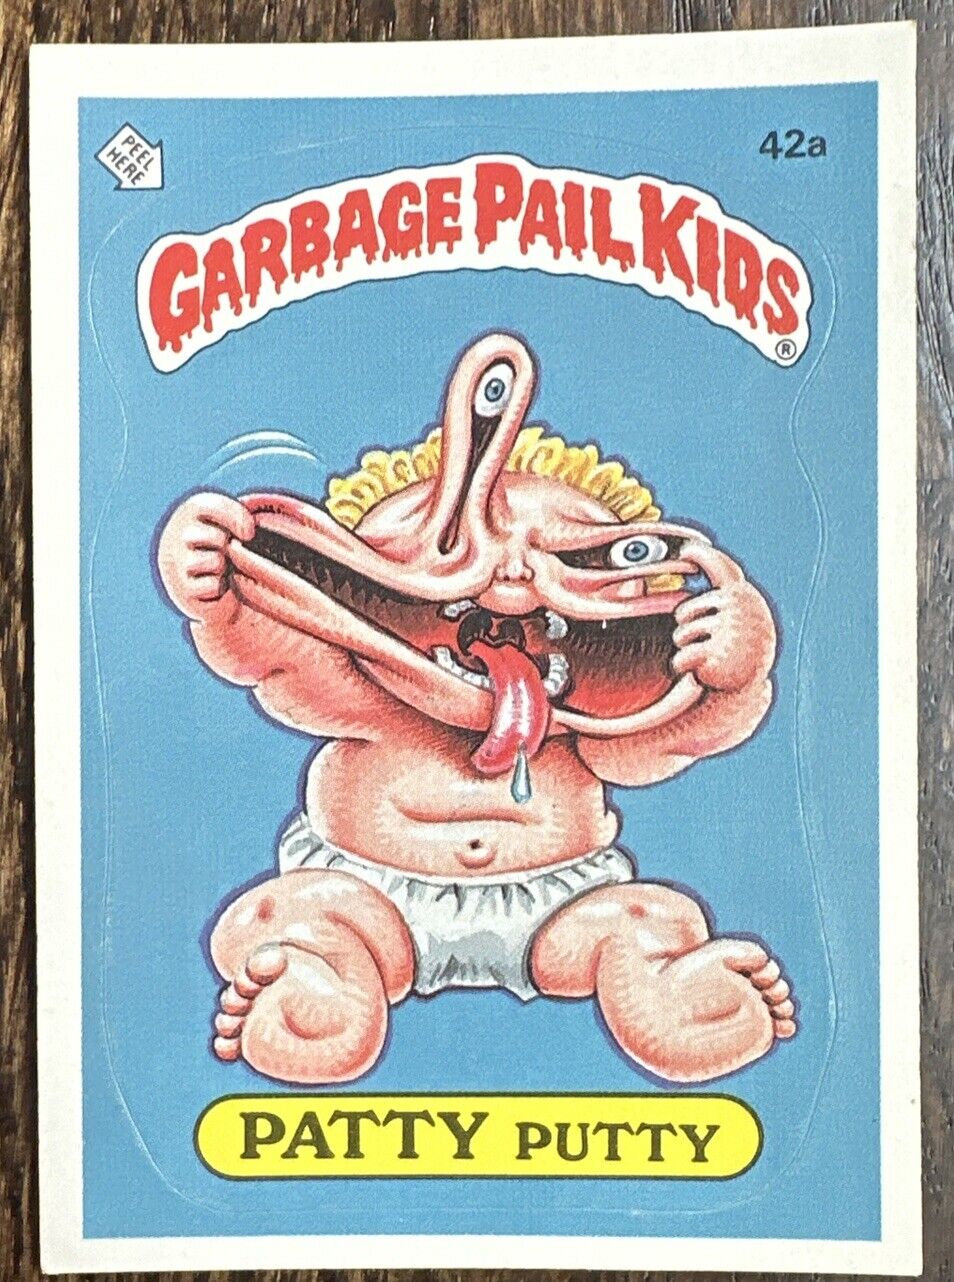 1985 Topps Garbage Pail Kids Original 2nd Series Card #42a PATTY PUTTY N Mint